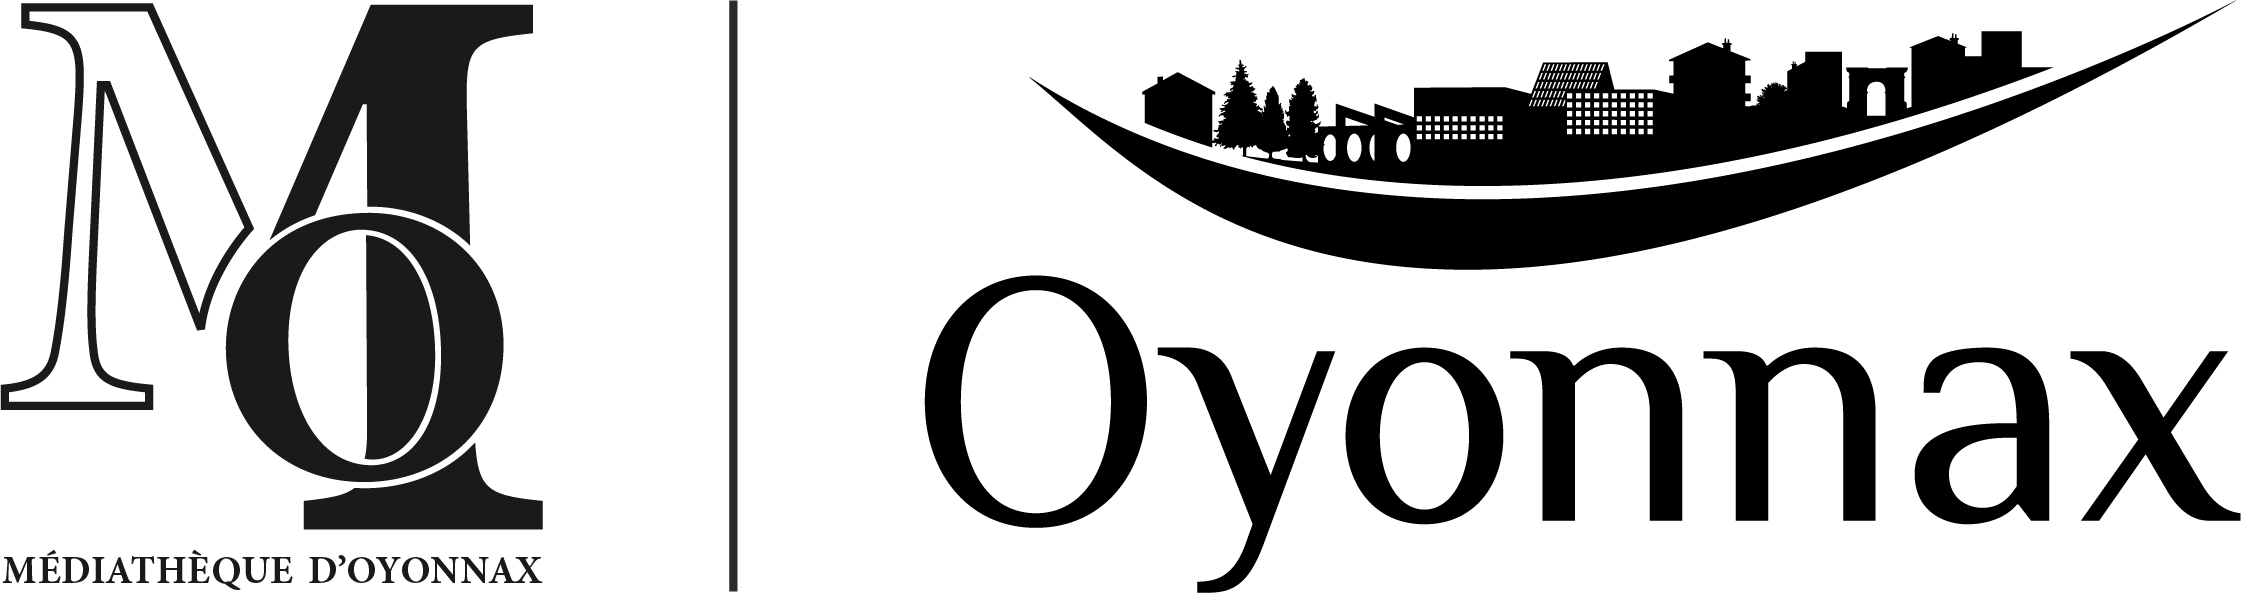 image logo RVB